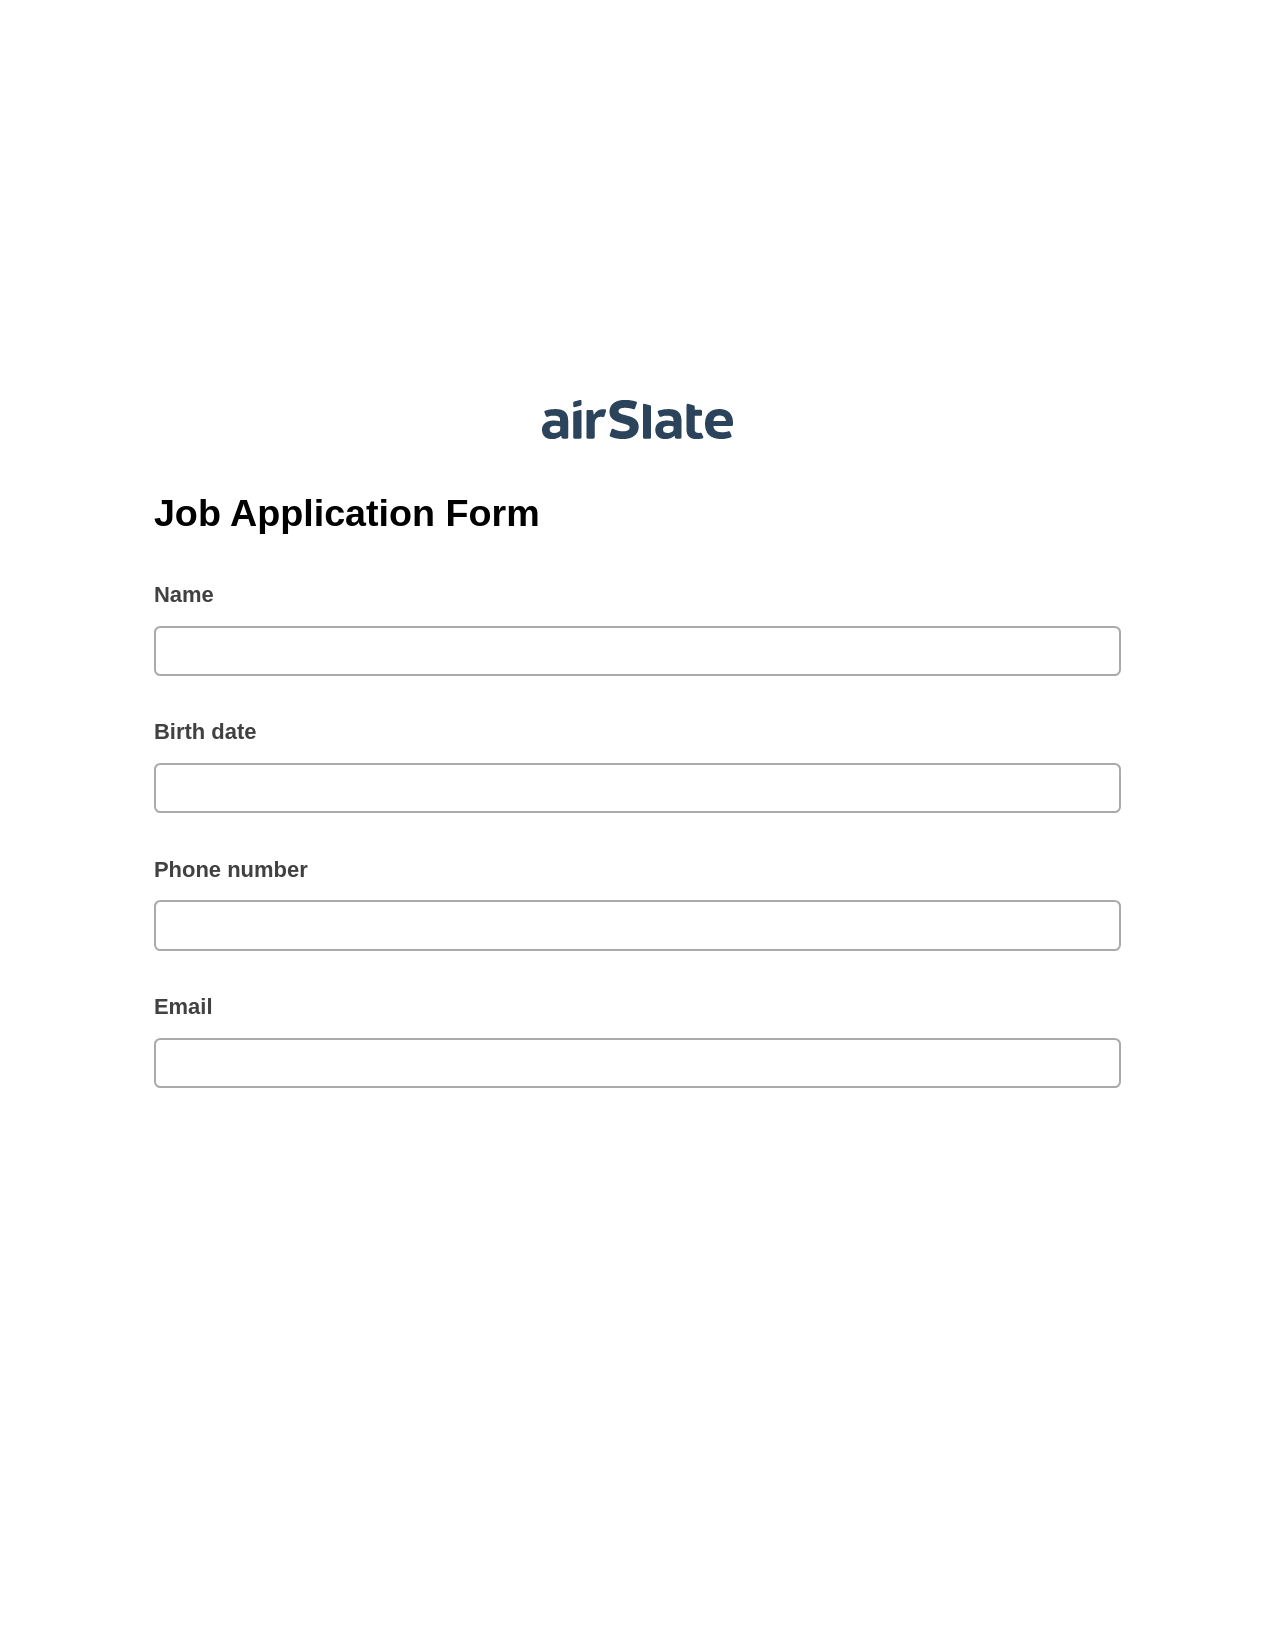 Job Application Form Pre-fill from MySQL Dropdown Options Bot, Pre-fill with Custom Data Bot, Post-finish Document Bot